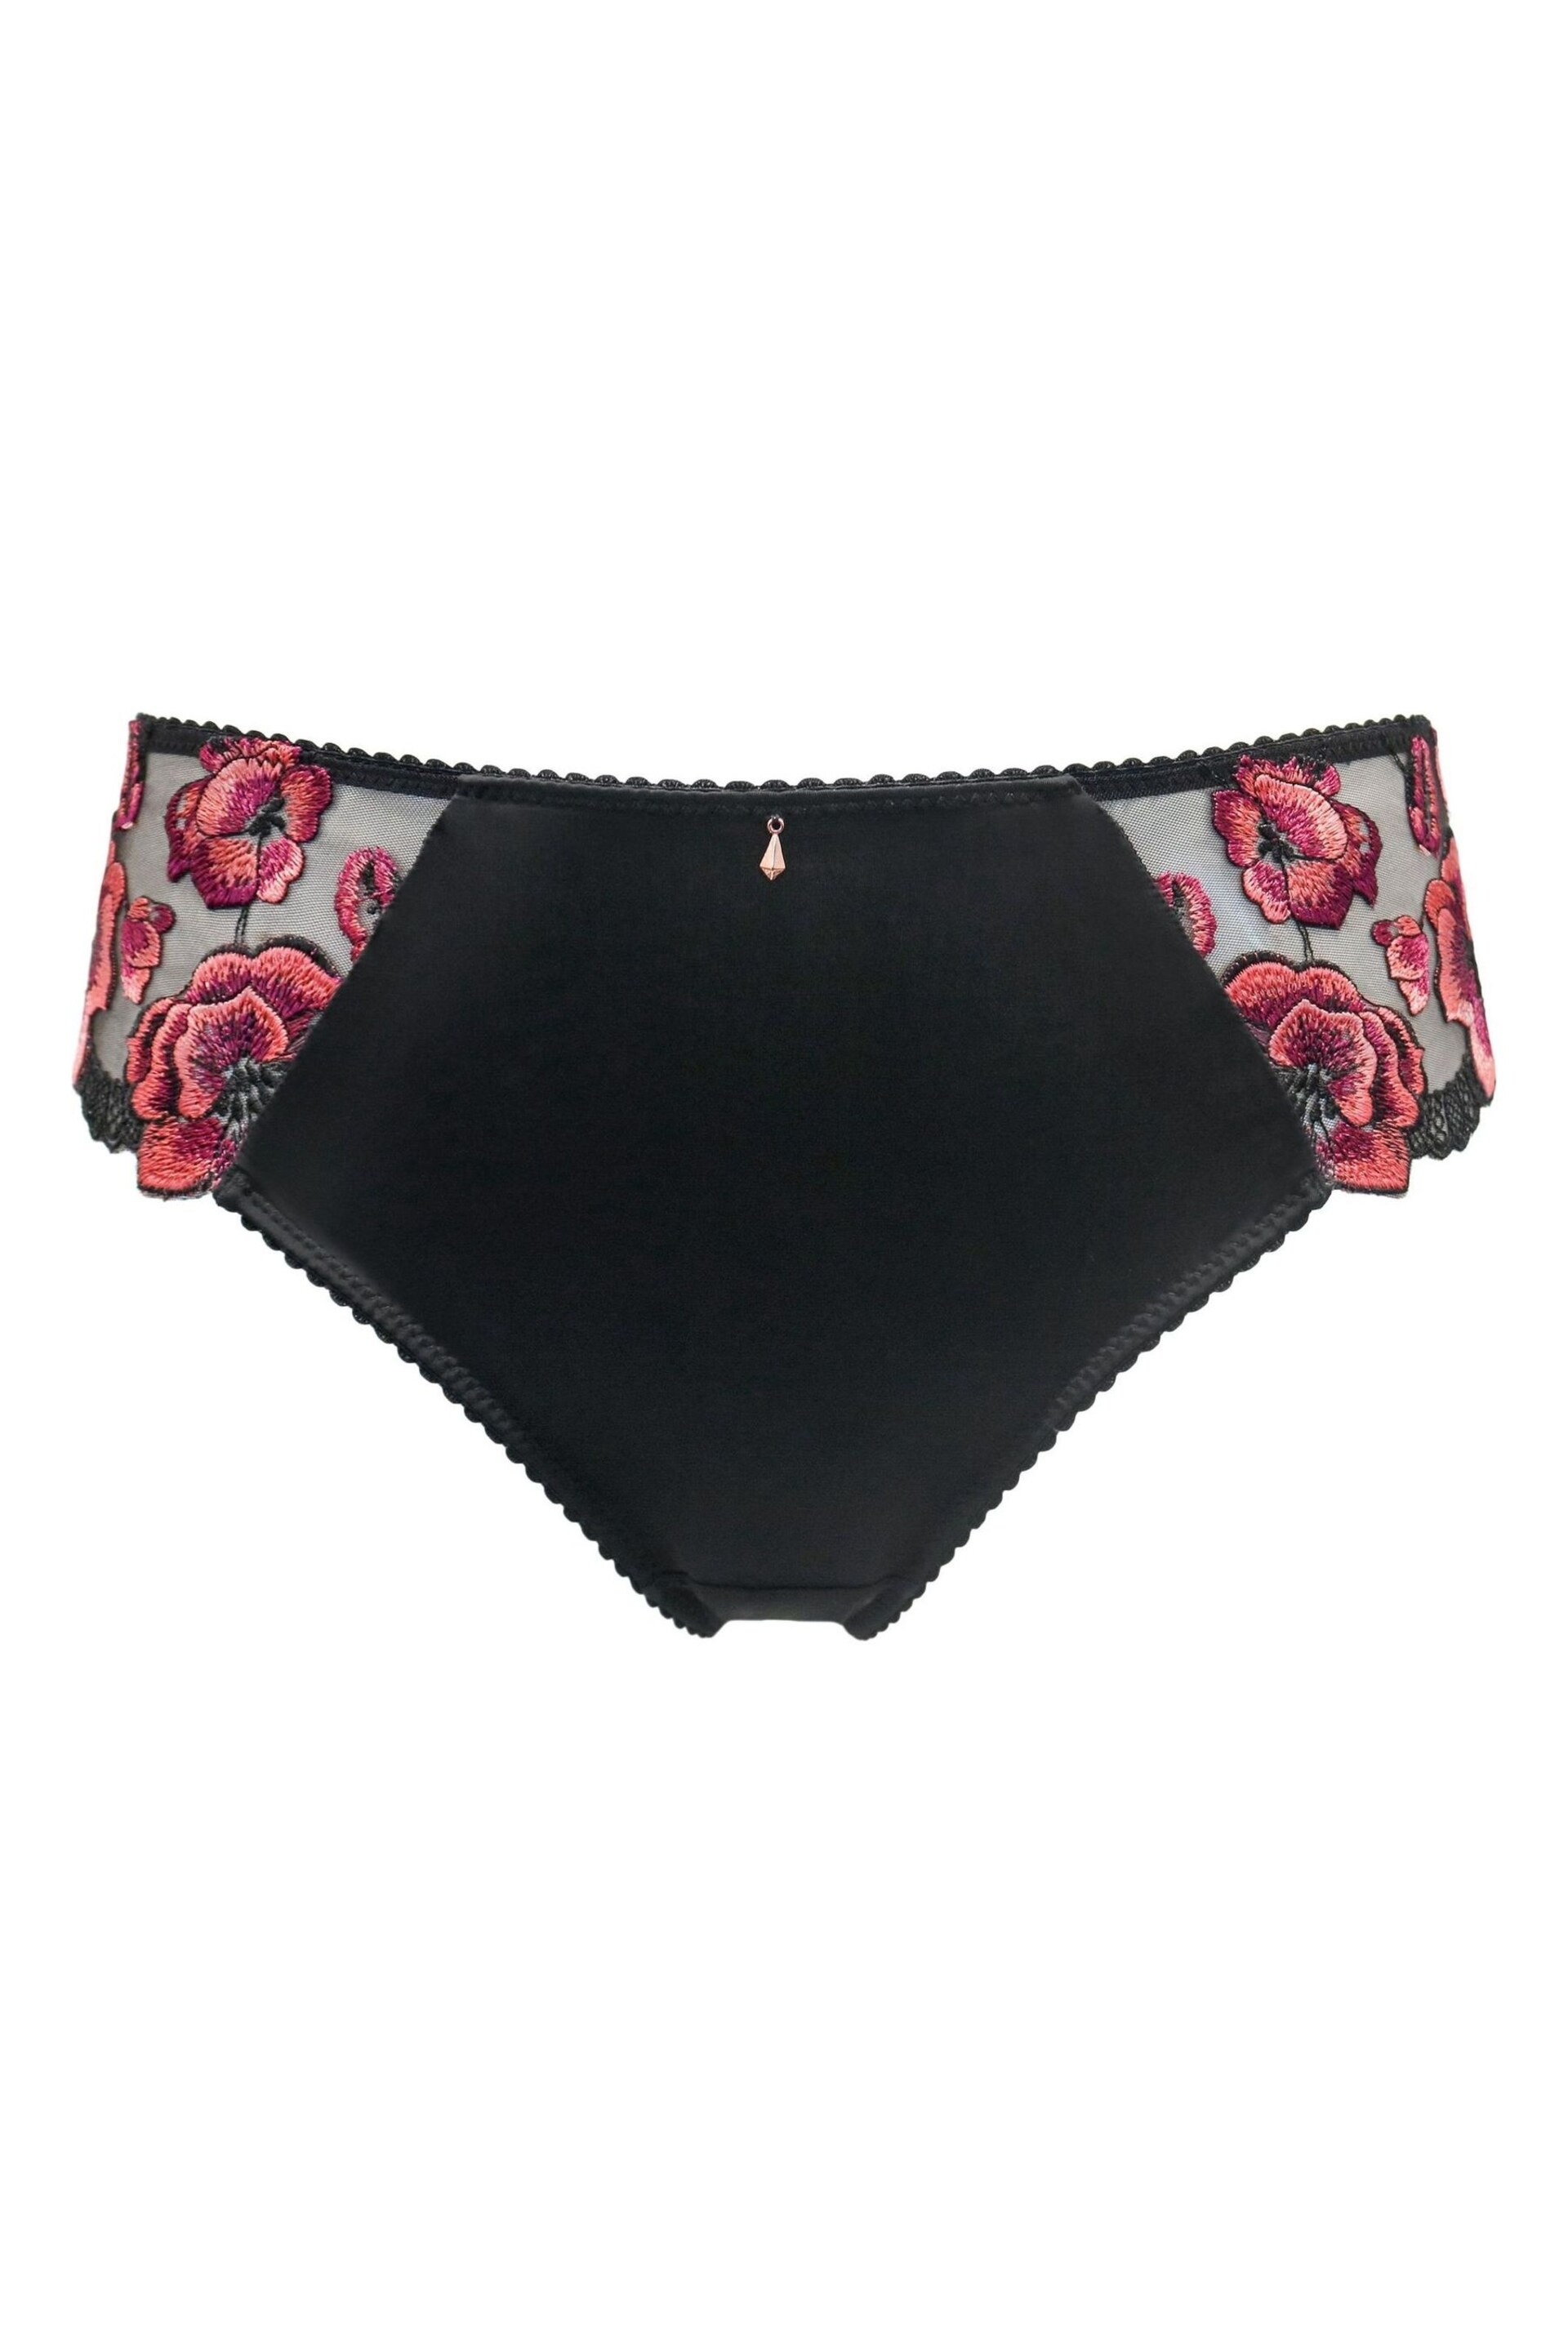 Pour Moi Black Soiree Embroidery Bikini Briefs - Image 3 of 4